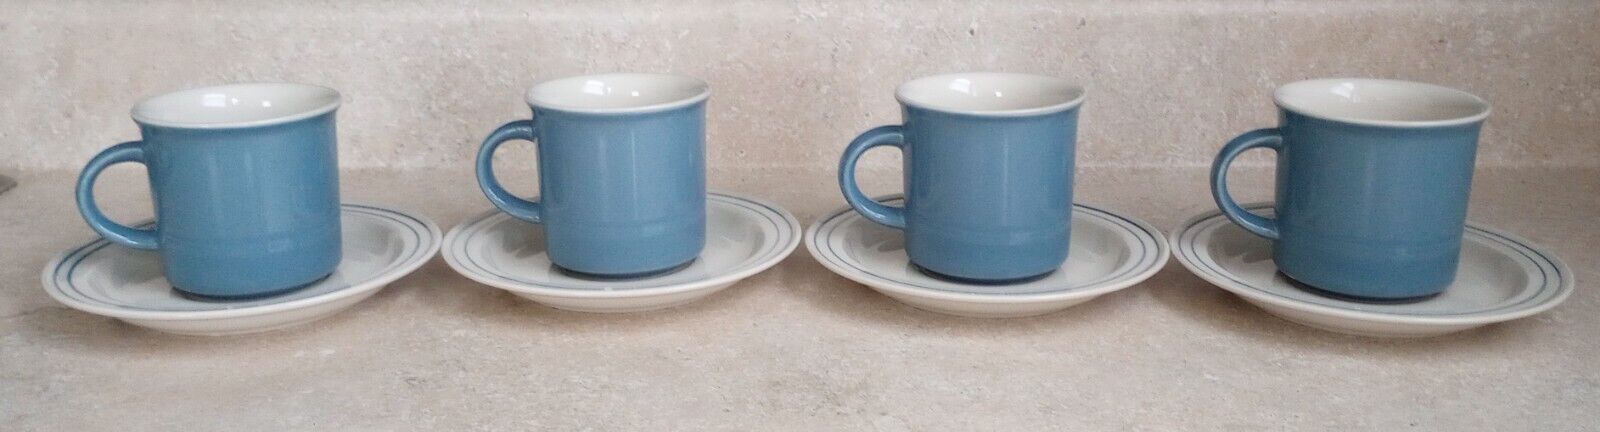 VTG Vintage EPOCH Japan Collection Blue Coffee Mugs & White Blue Plates Set of 4